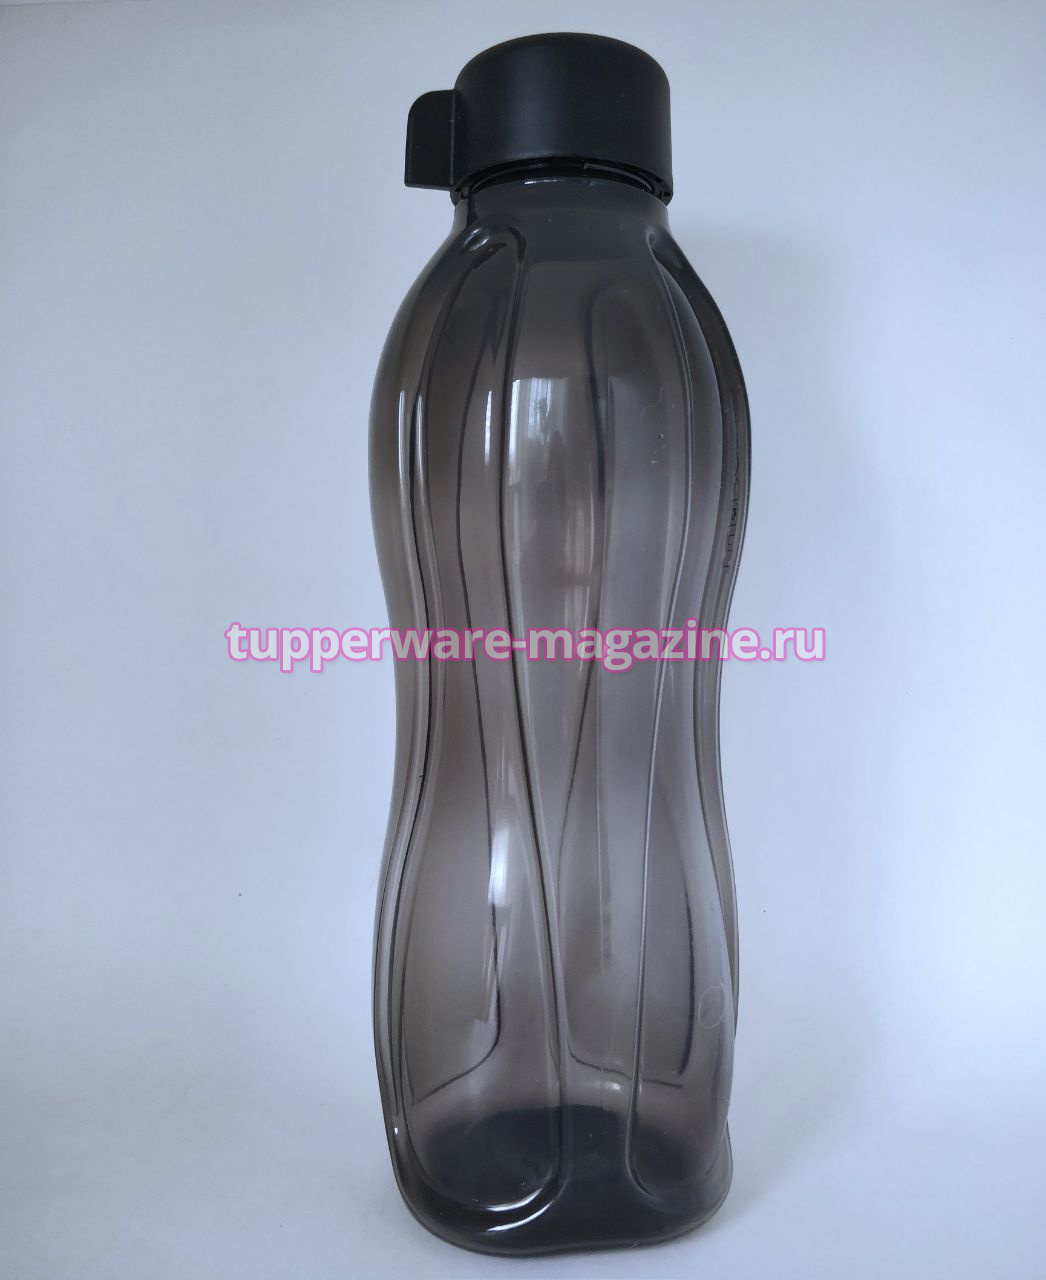 Эко-бутылка 1 л без клапана в черном цвете